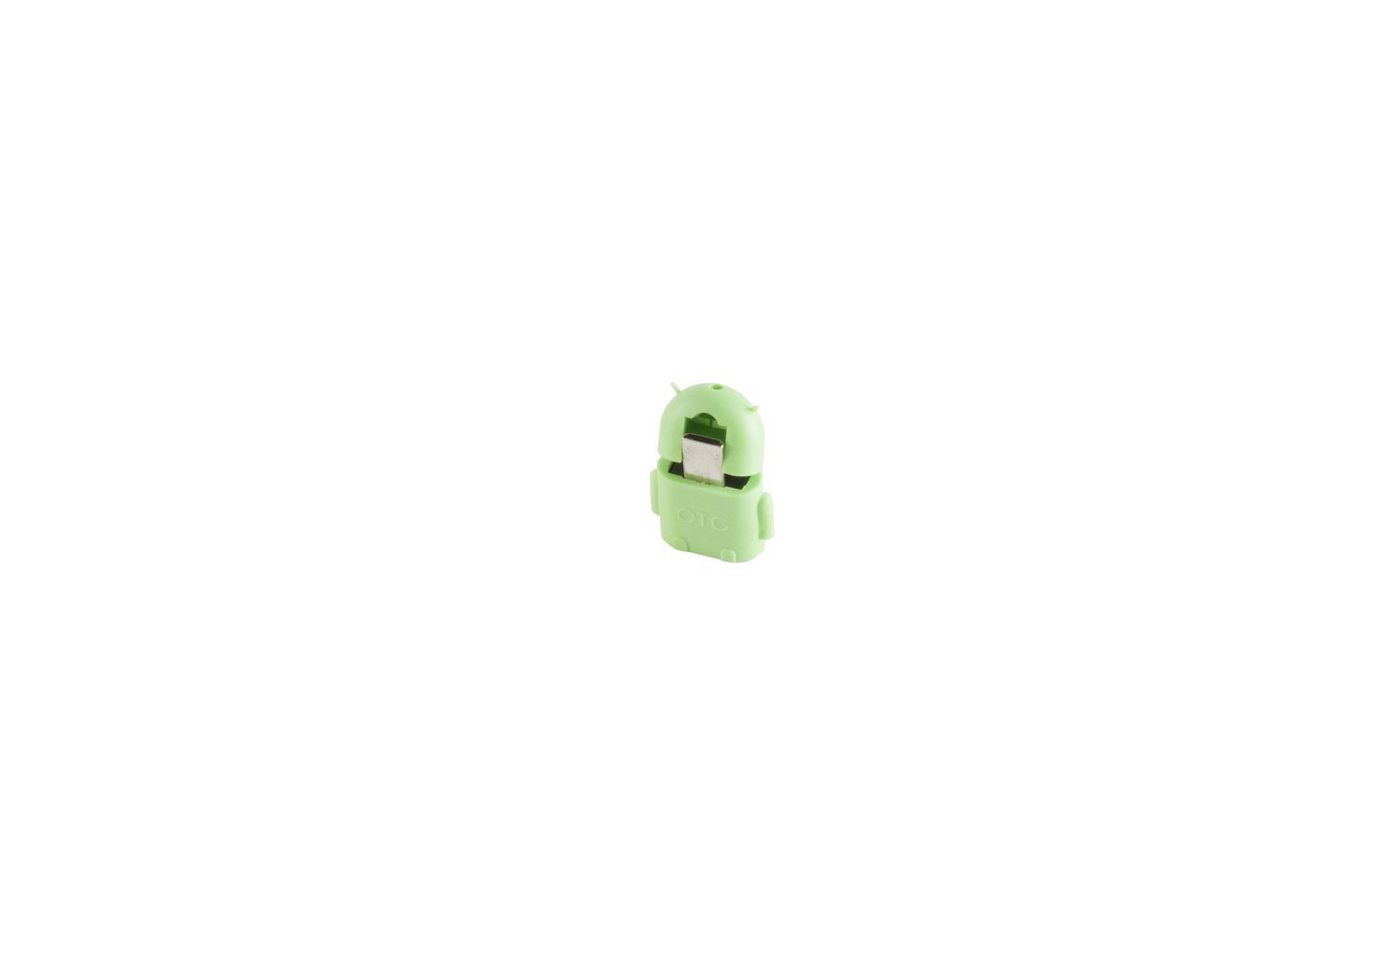 S-Conn USB-OTG Micro-B Stecker auf A-Buchse 2.0, grün Smartphone-Adapter von S-Conn